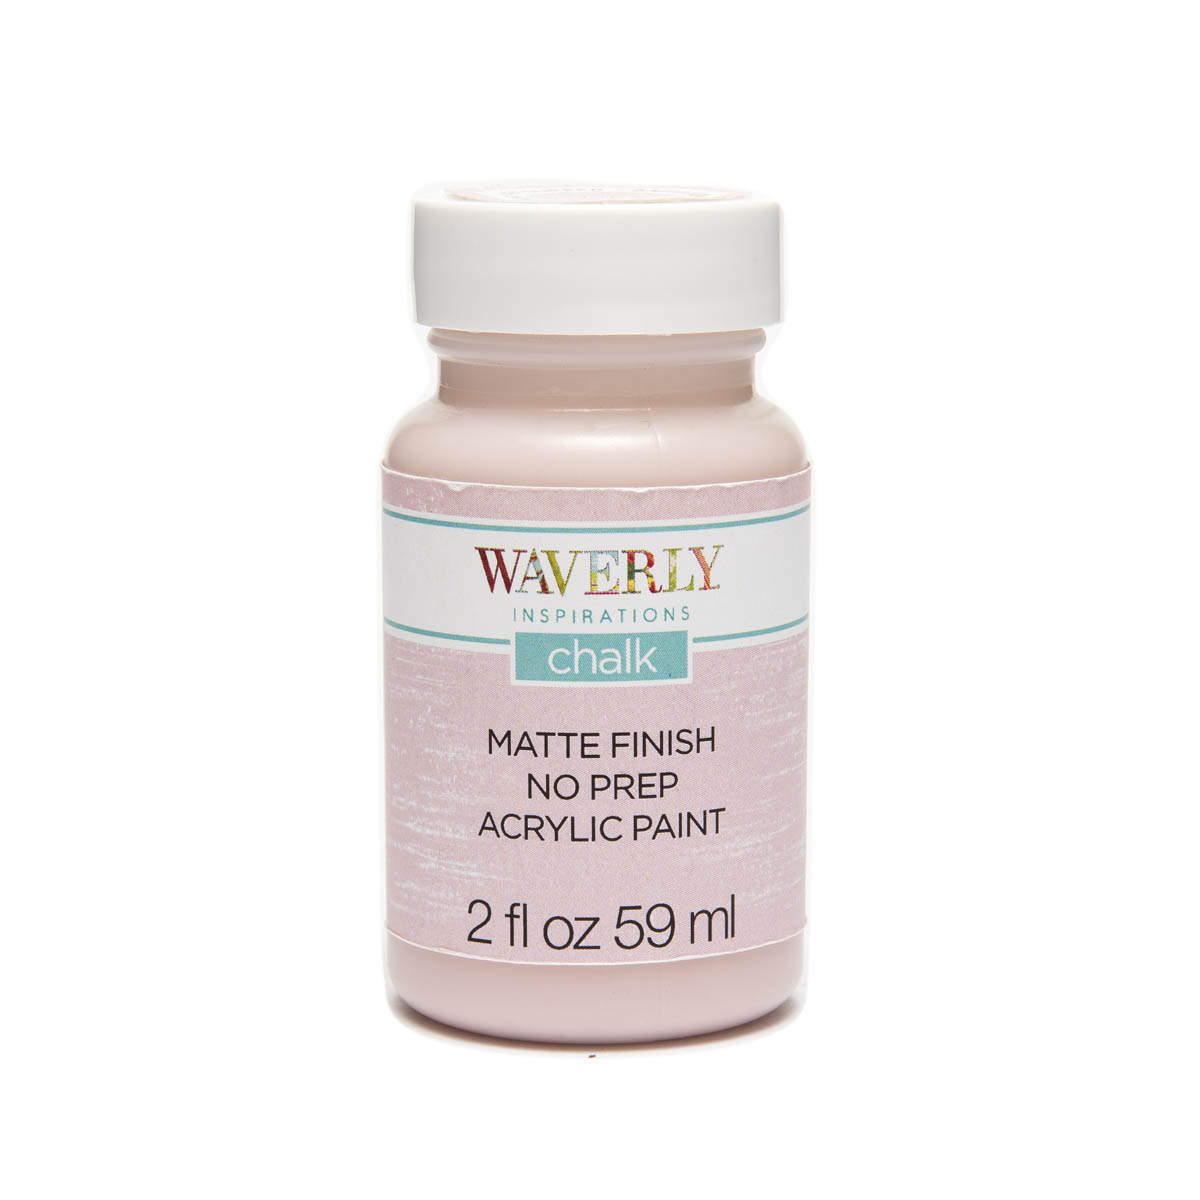 Waverly ® Inspirations Chalk Finish Acrylic Paint - Ballet Slipper, 2 oz. - 60740E